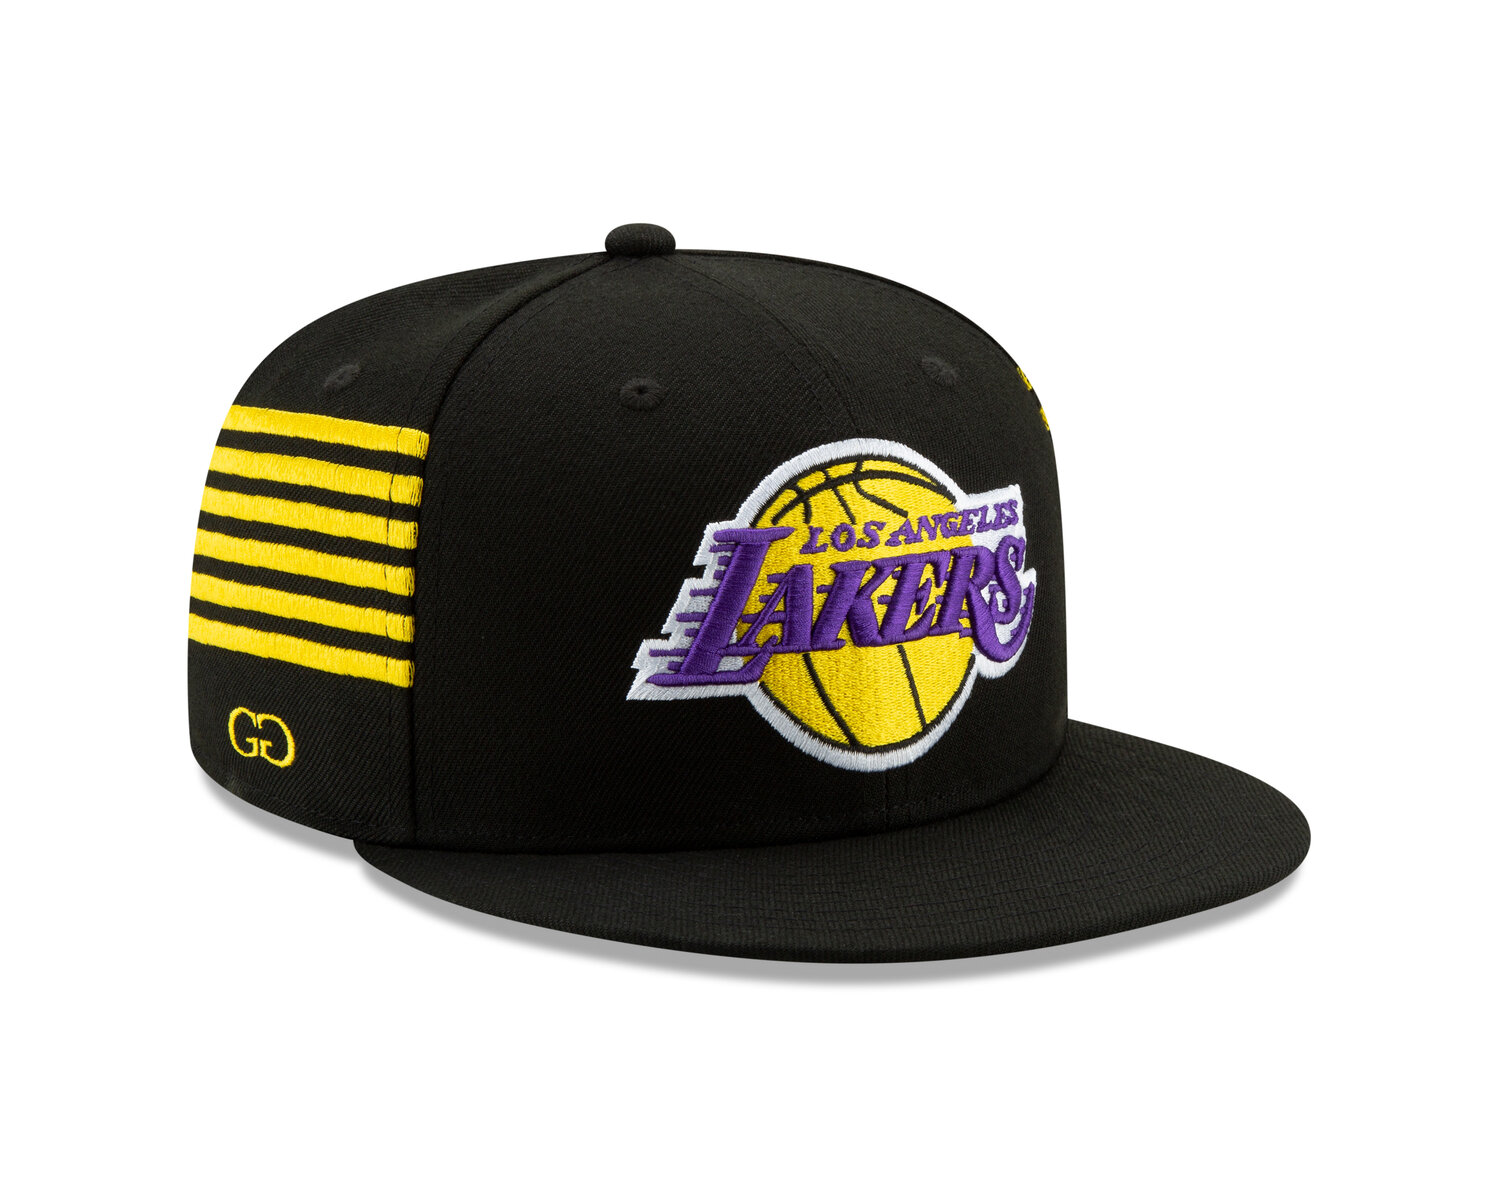 LA Lakers T — Grungy Gentleman